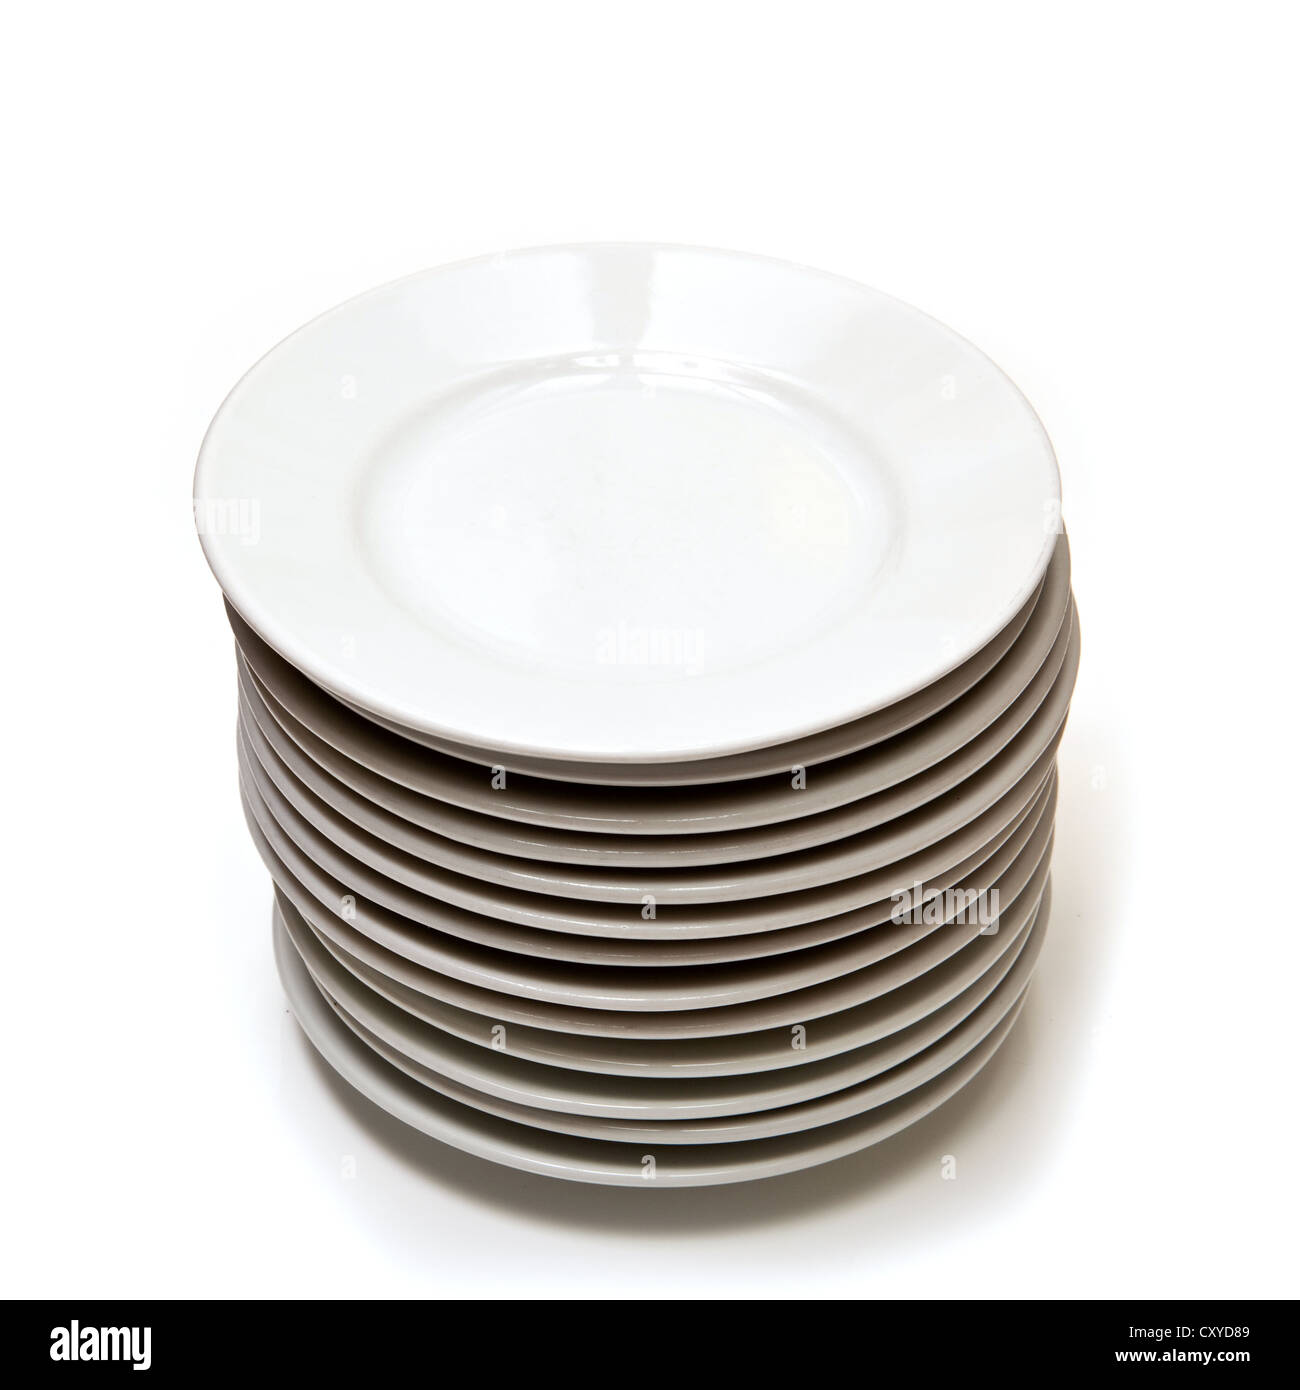 Pile of white china plates isolated on a white studio background. Stock Photo